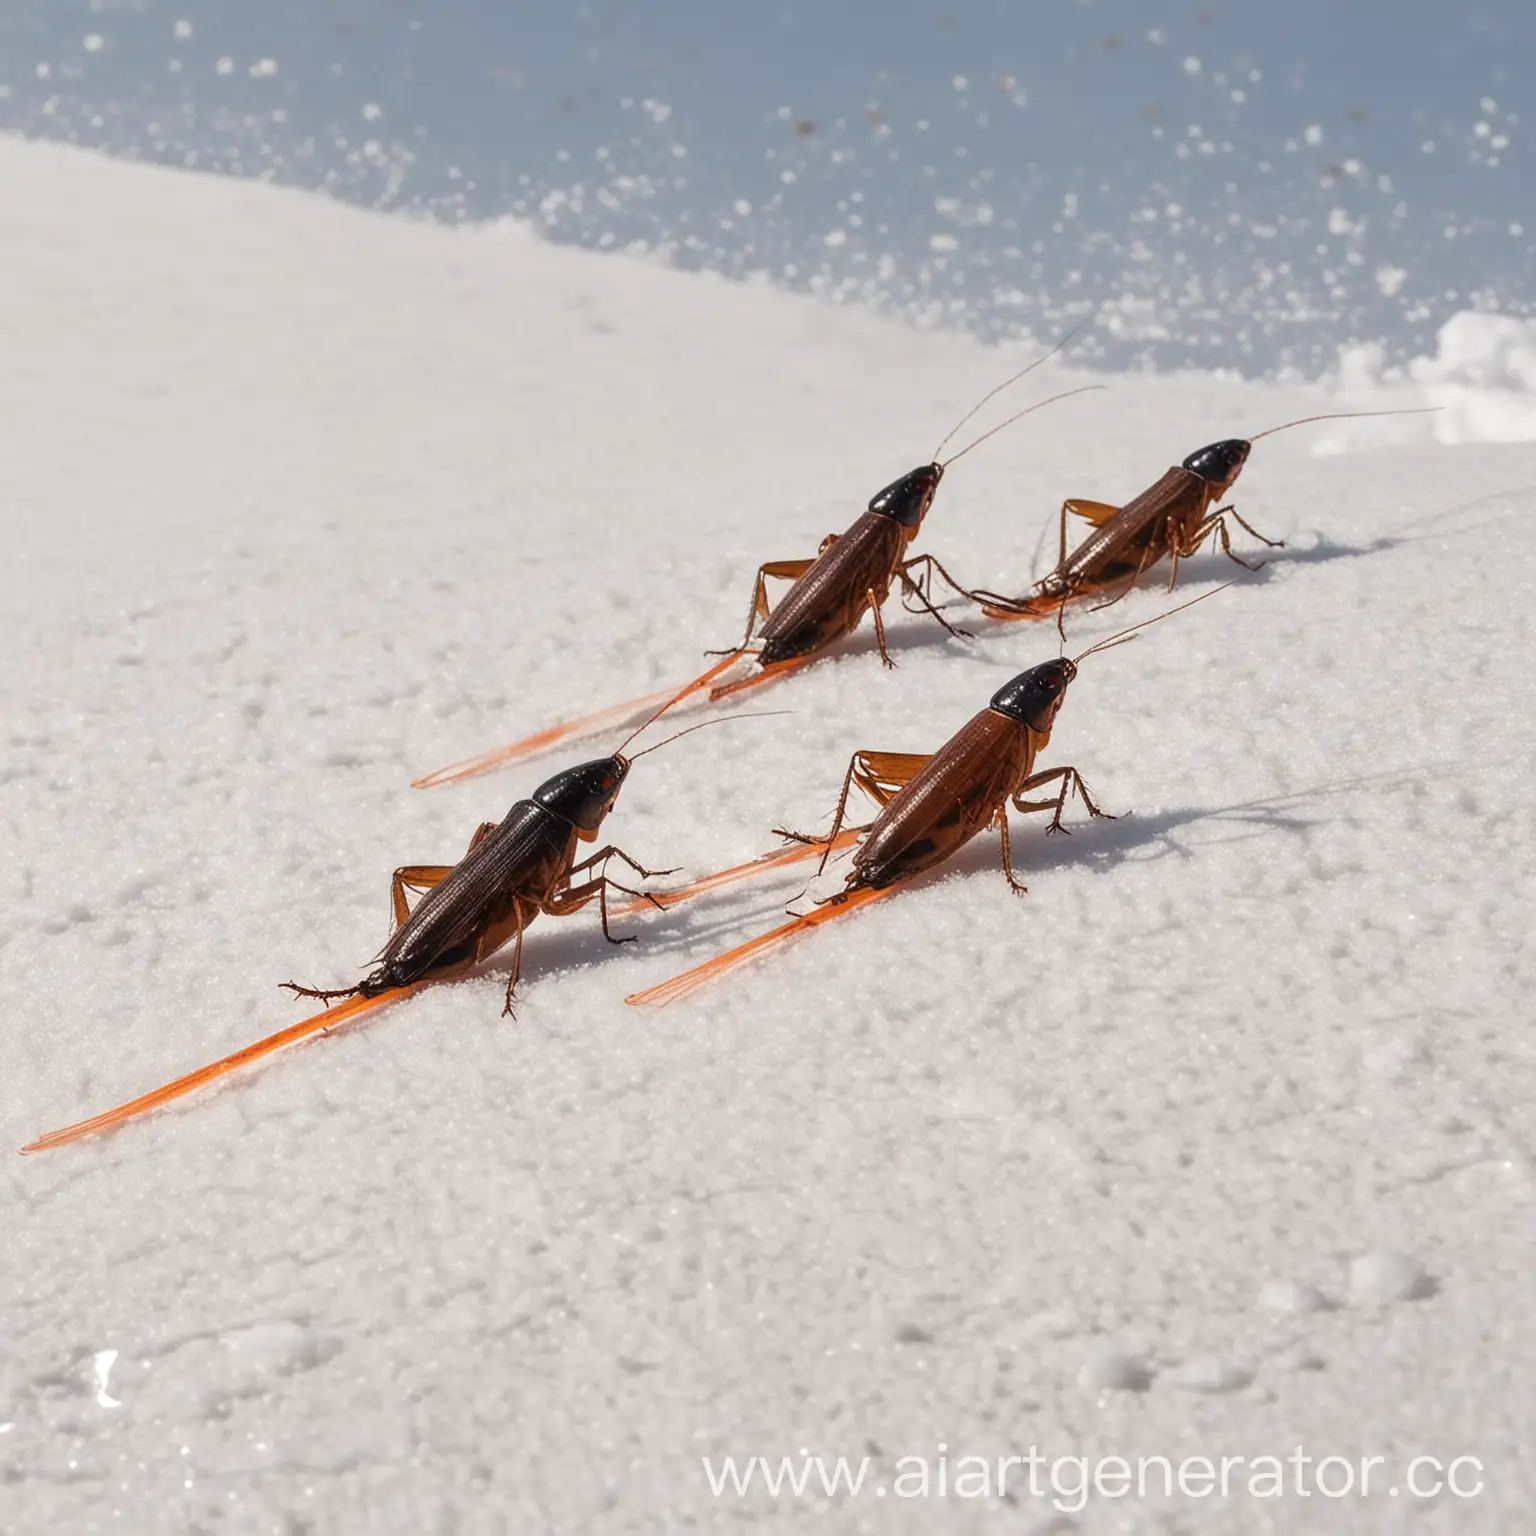 Cockroaches-Enjoying-Winter-Sports-on-the-Slopes